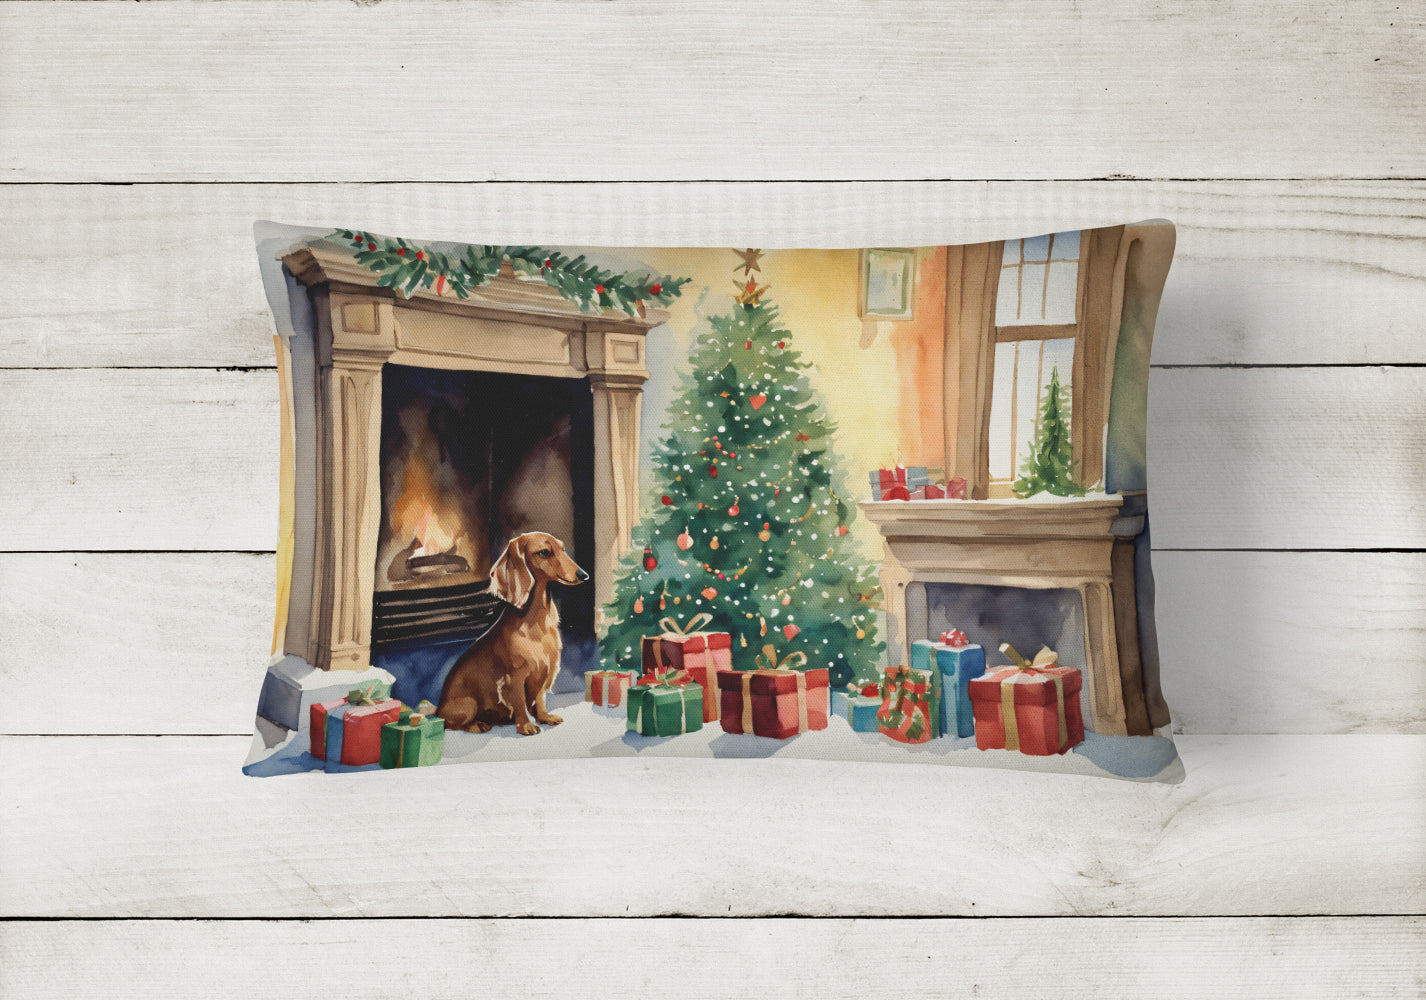 Buy this Dachshund Christmas Fabric Decorative Pillow